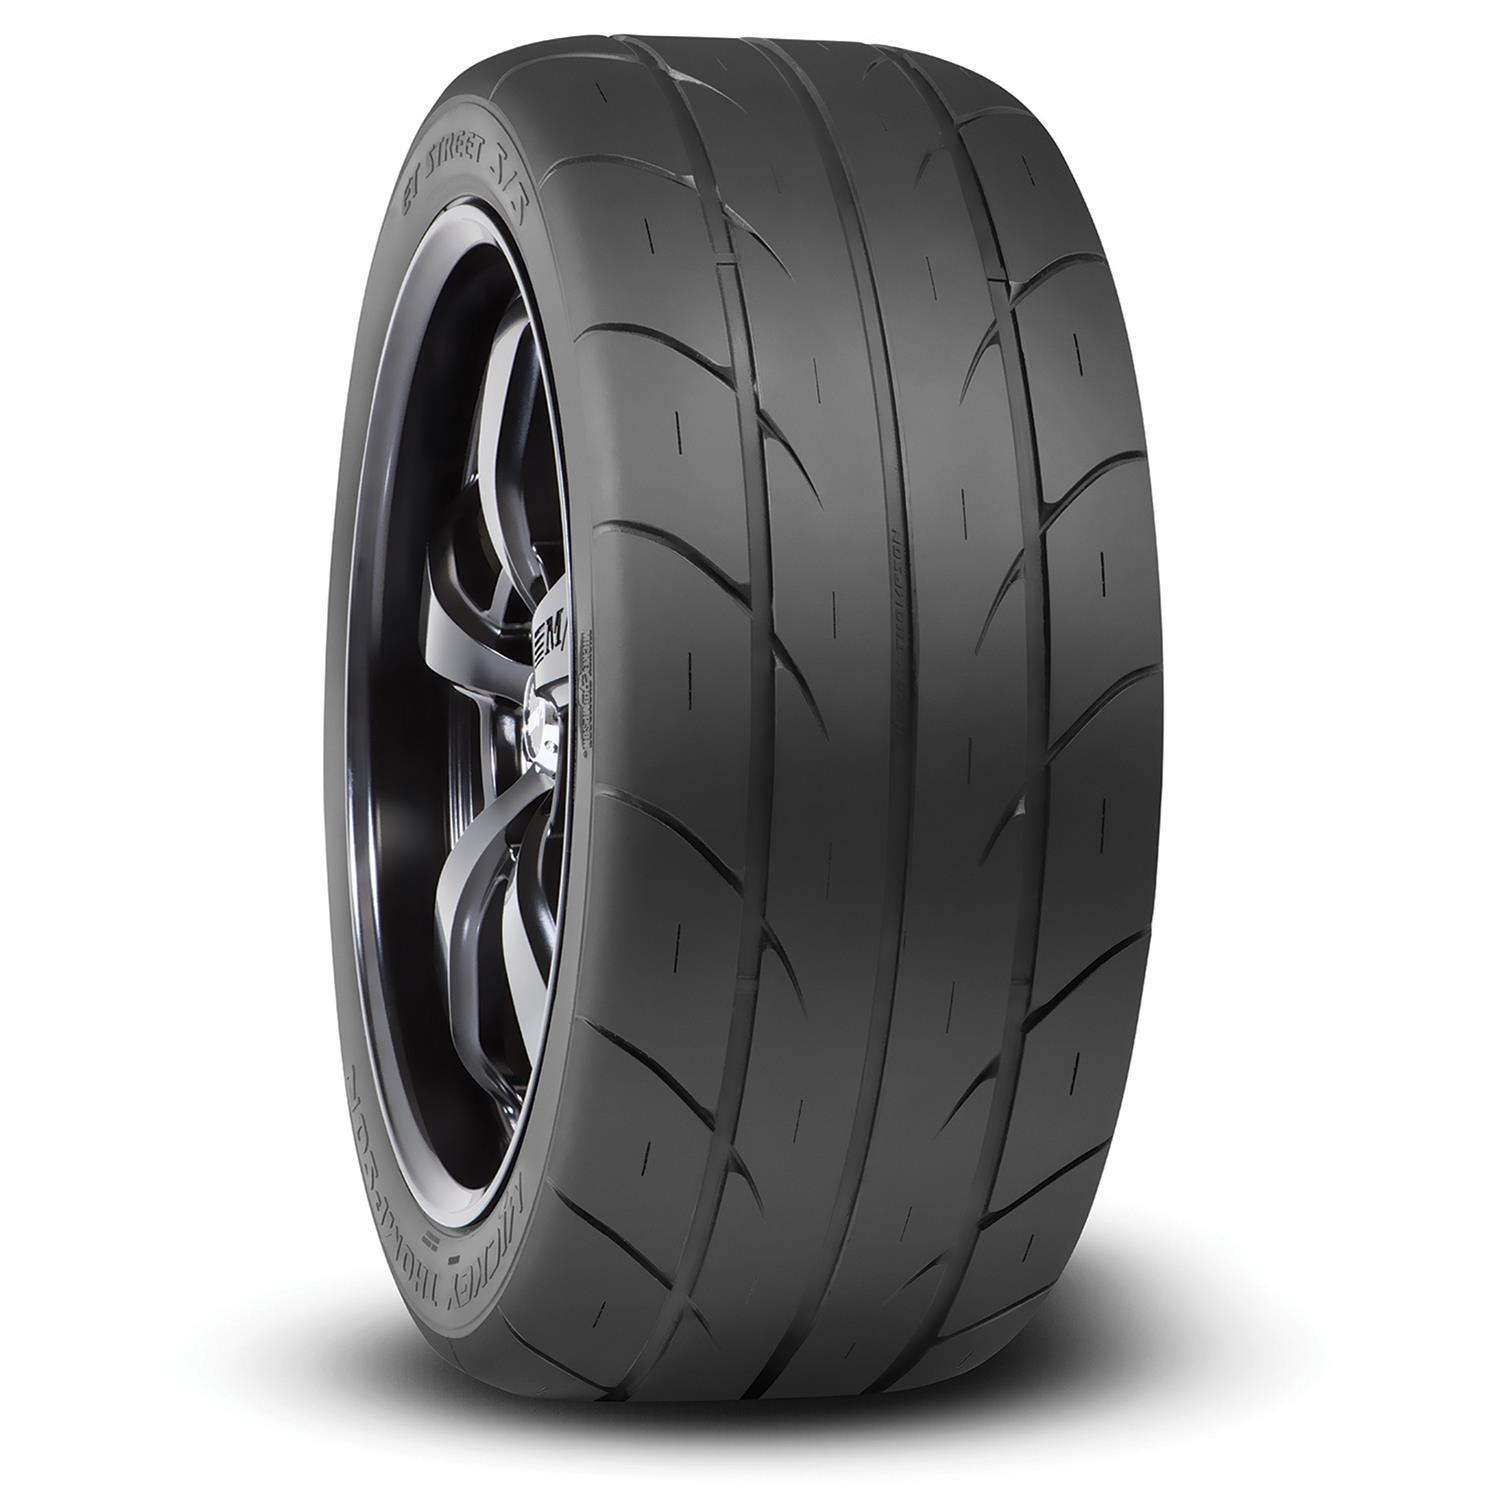 P275/40R17 ET Street S/S Tire - Burlile Performance Products